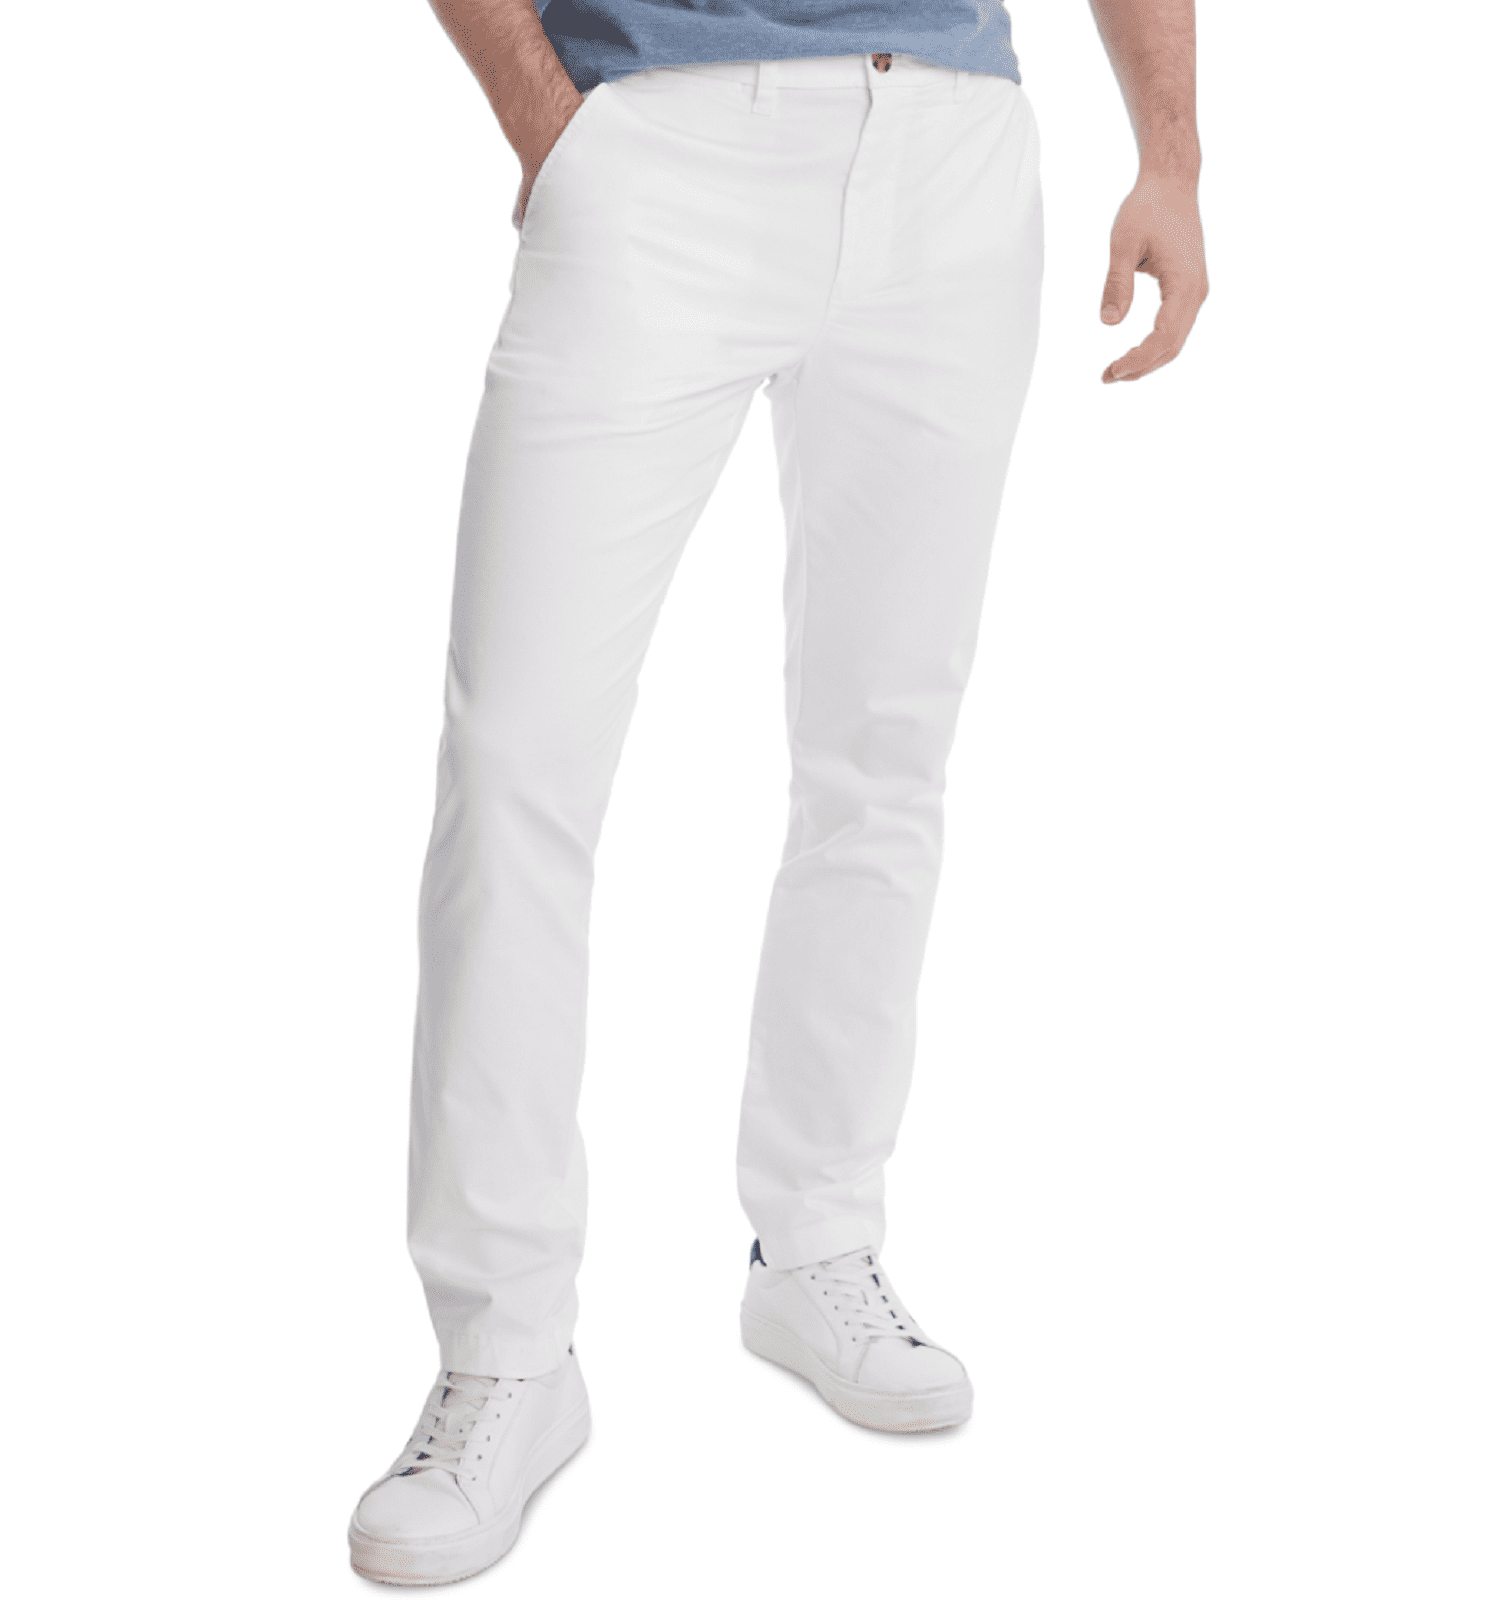 lyse boykot tilnærmelse Tommy Hilfiger Men's TH Flex Stretch Slim-Fit Chino Pants, White, 40Wx30L -  Walmart.com